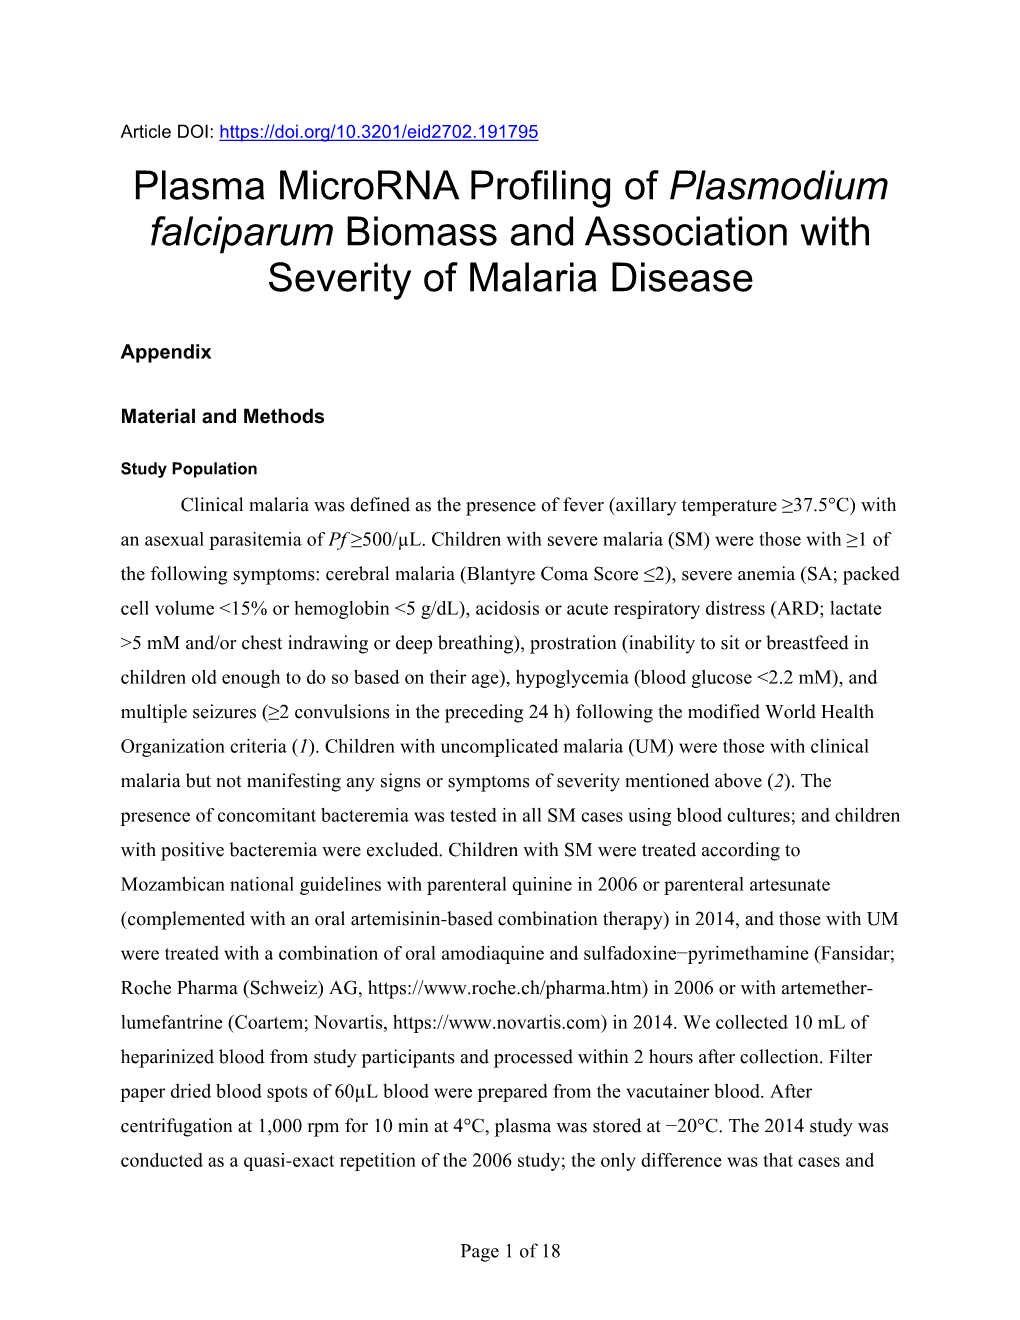 Plasma Microrna Profiling of Plasmodium Falciparum Biomass and Association with Severity of Malaria Disease